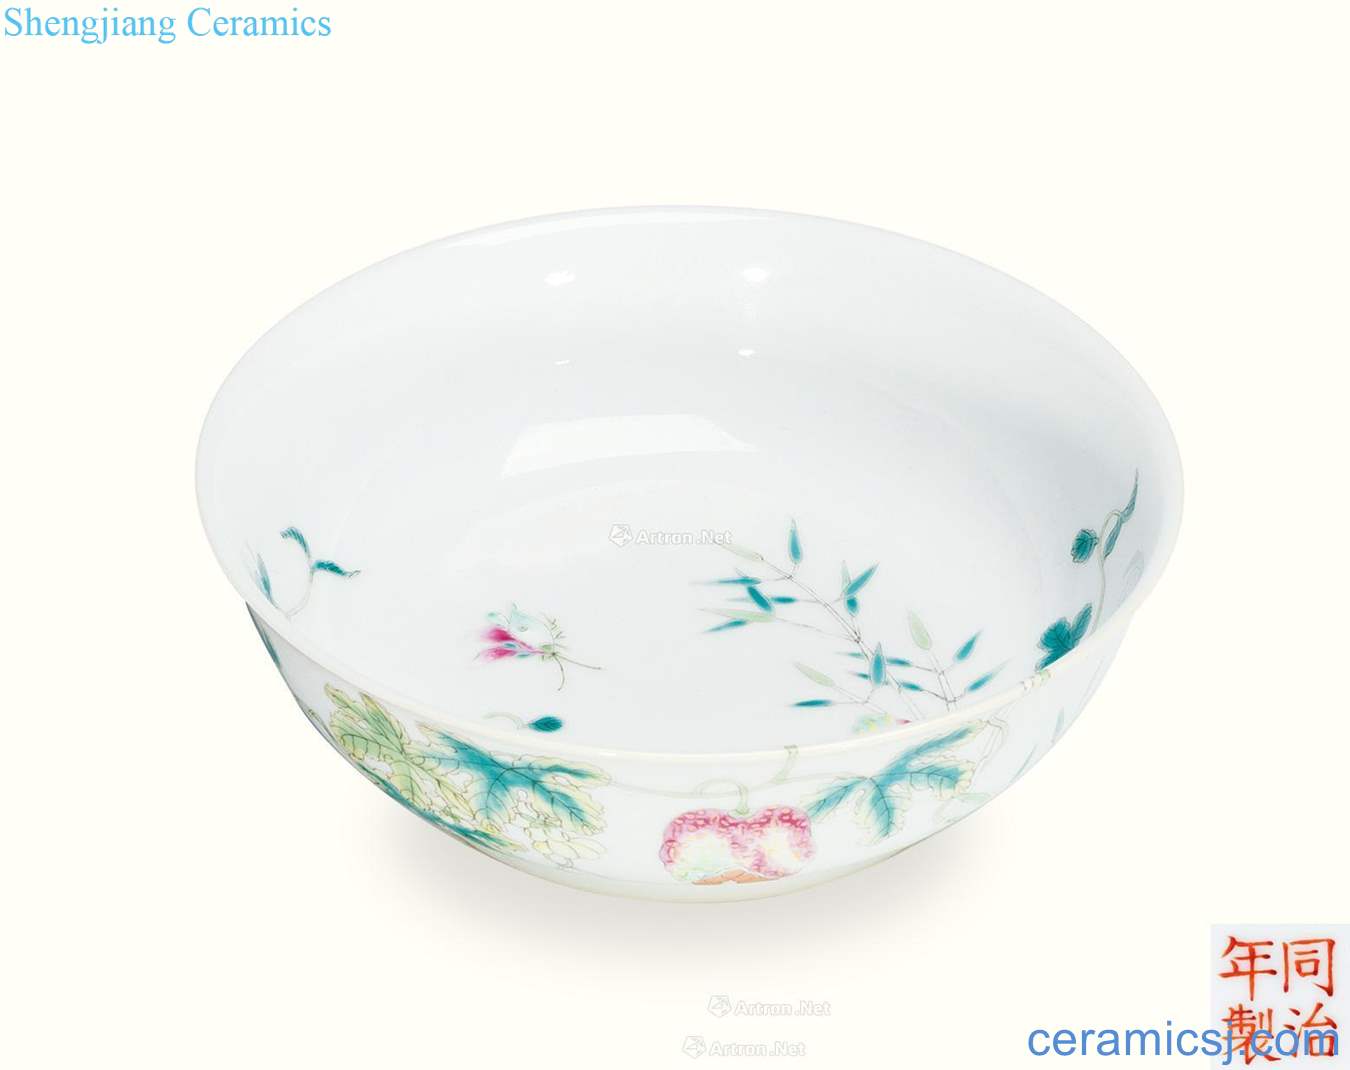 Dajing pastel the flourishing of descendants of stretch green-splashed bowls